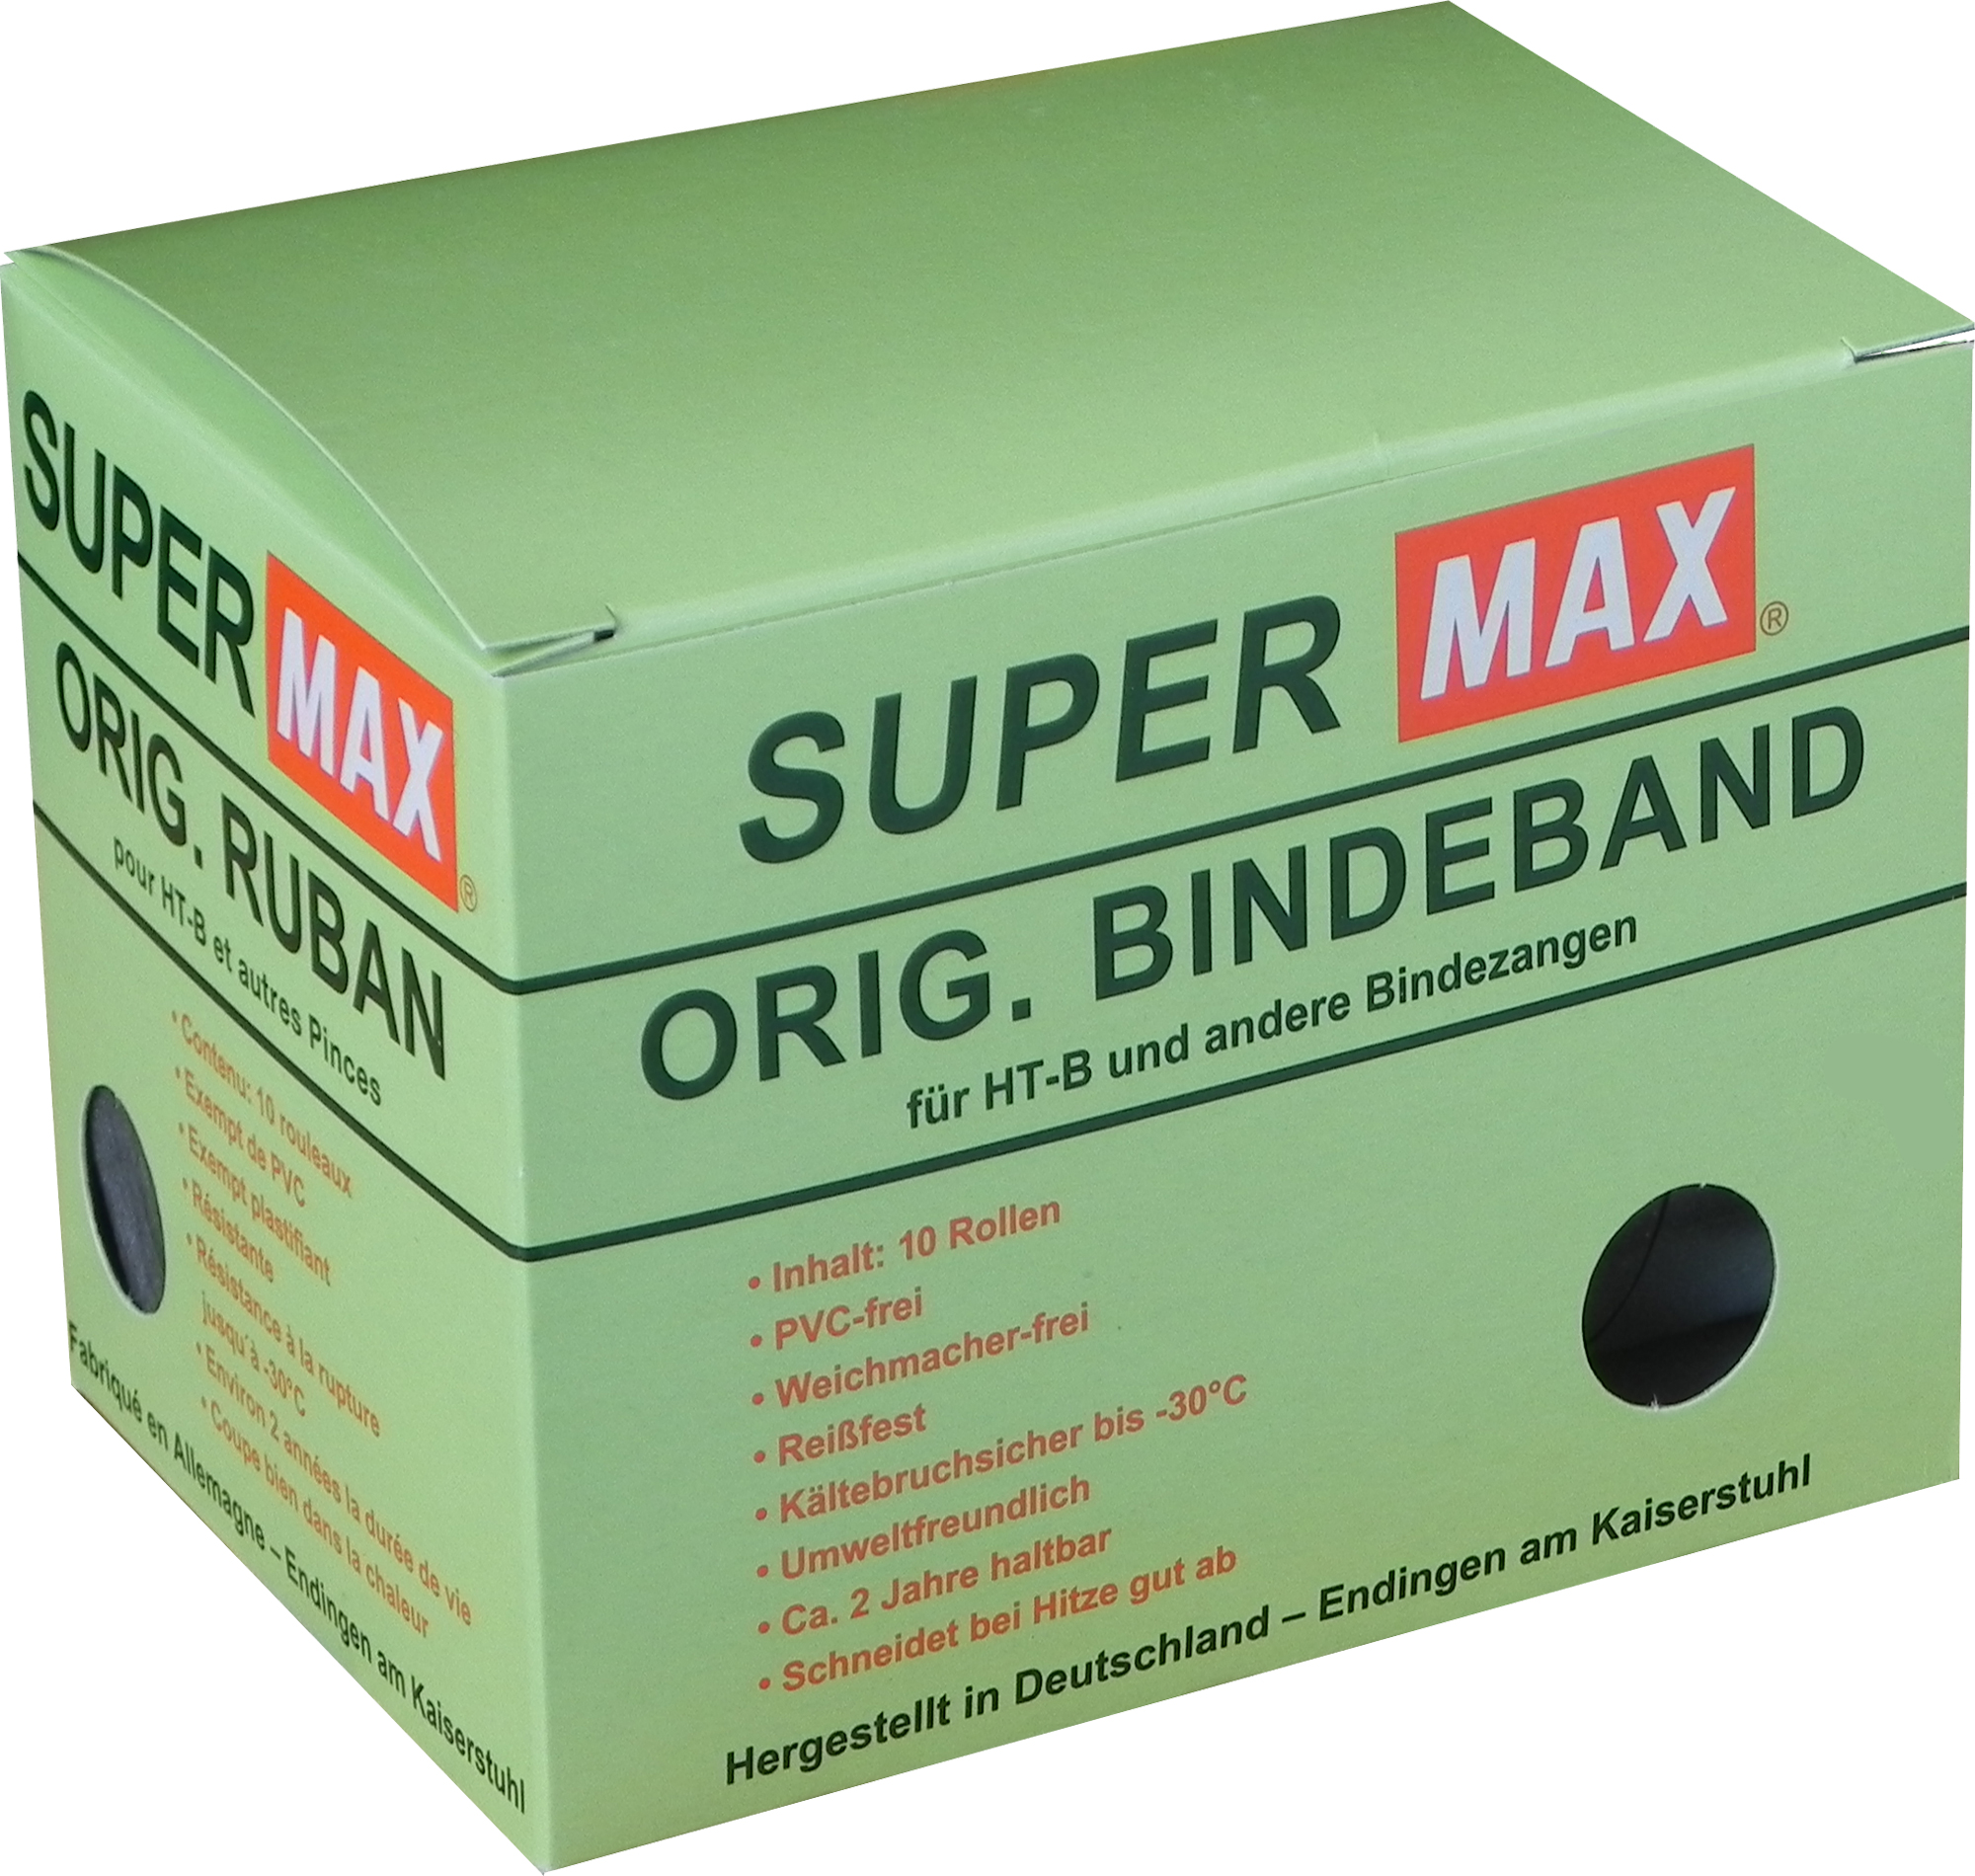 Supermax Tape, Stärke 0,10 mm Karton à 10 Rollen, grün